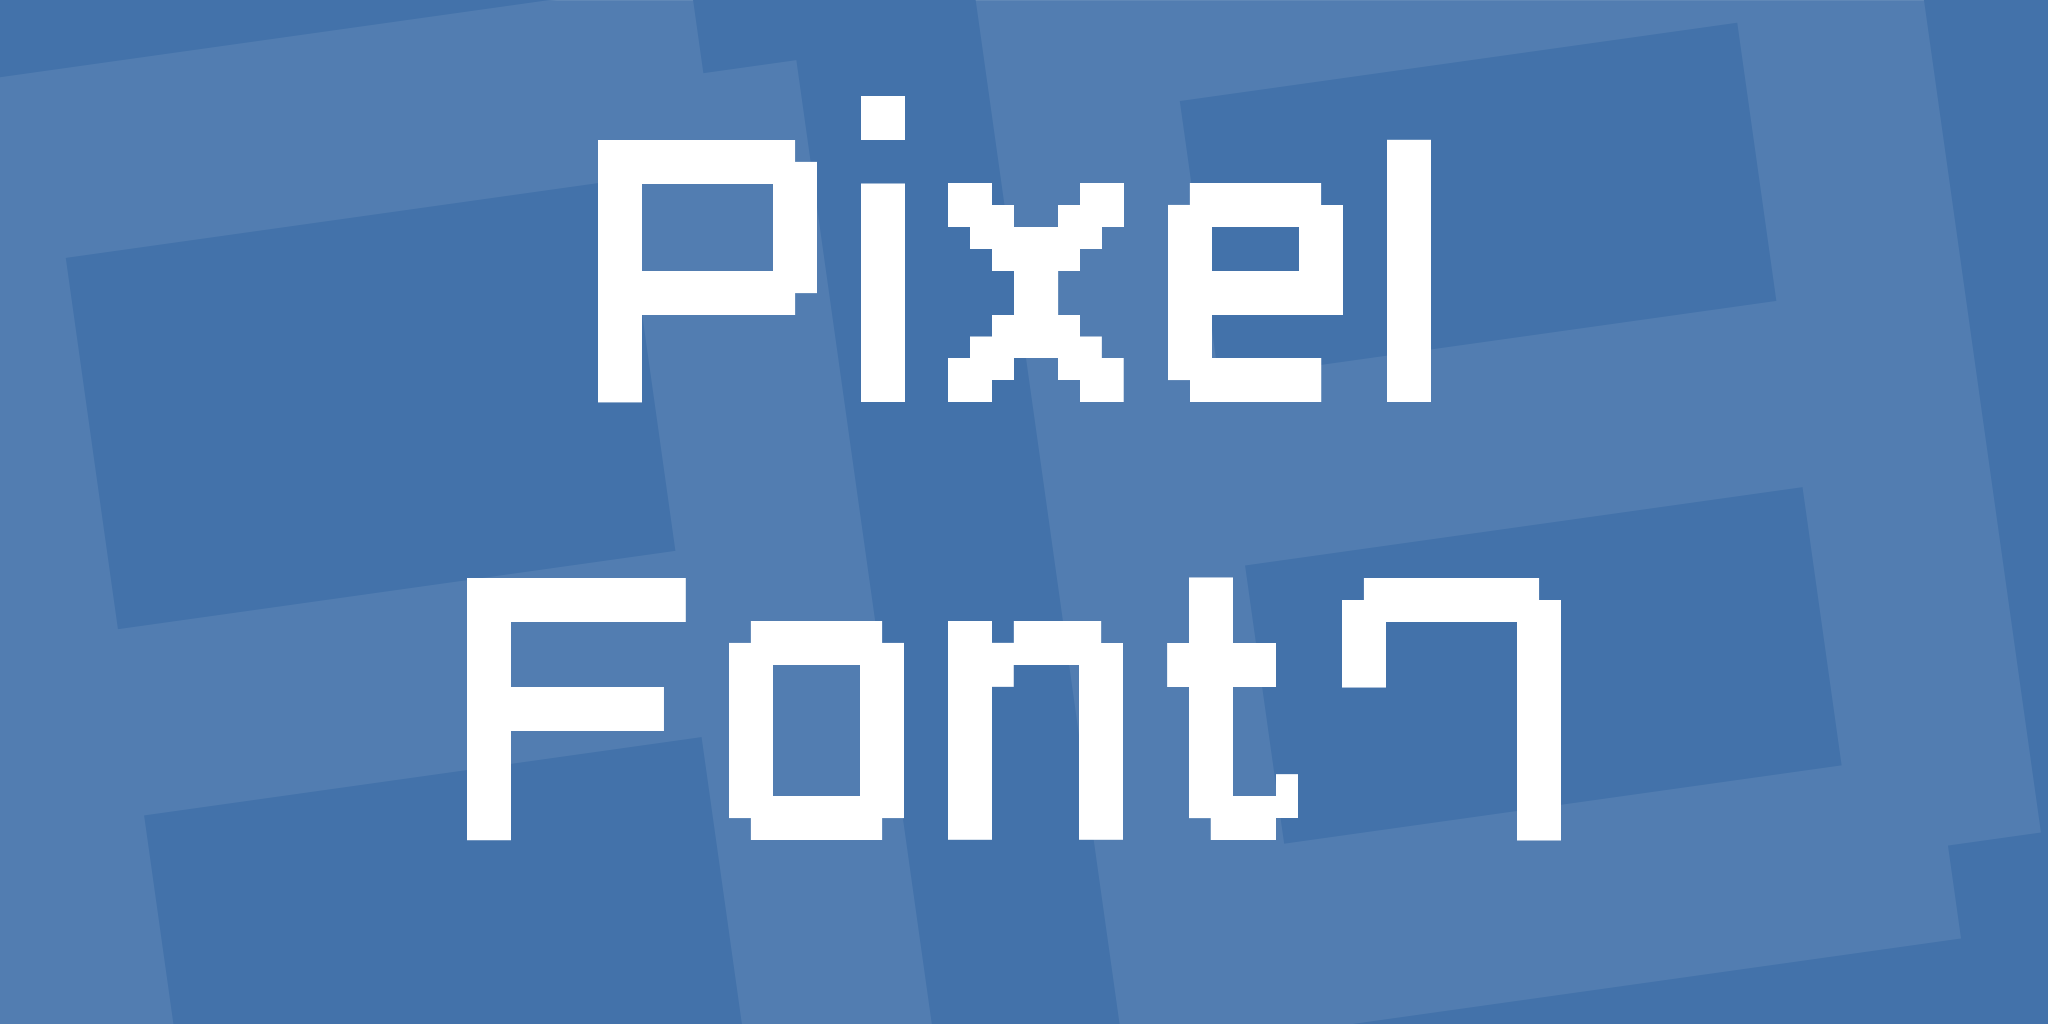 Pixel 7